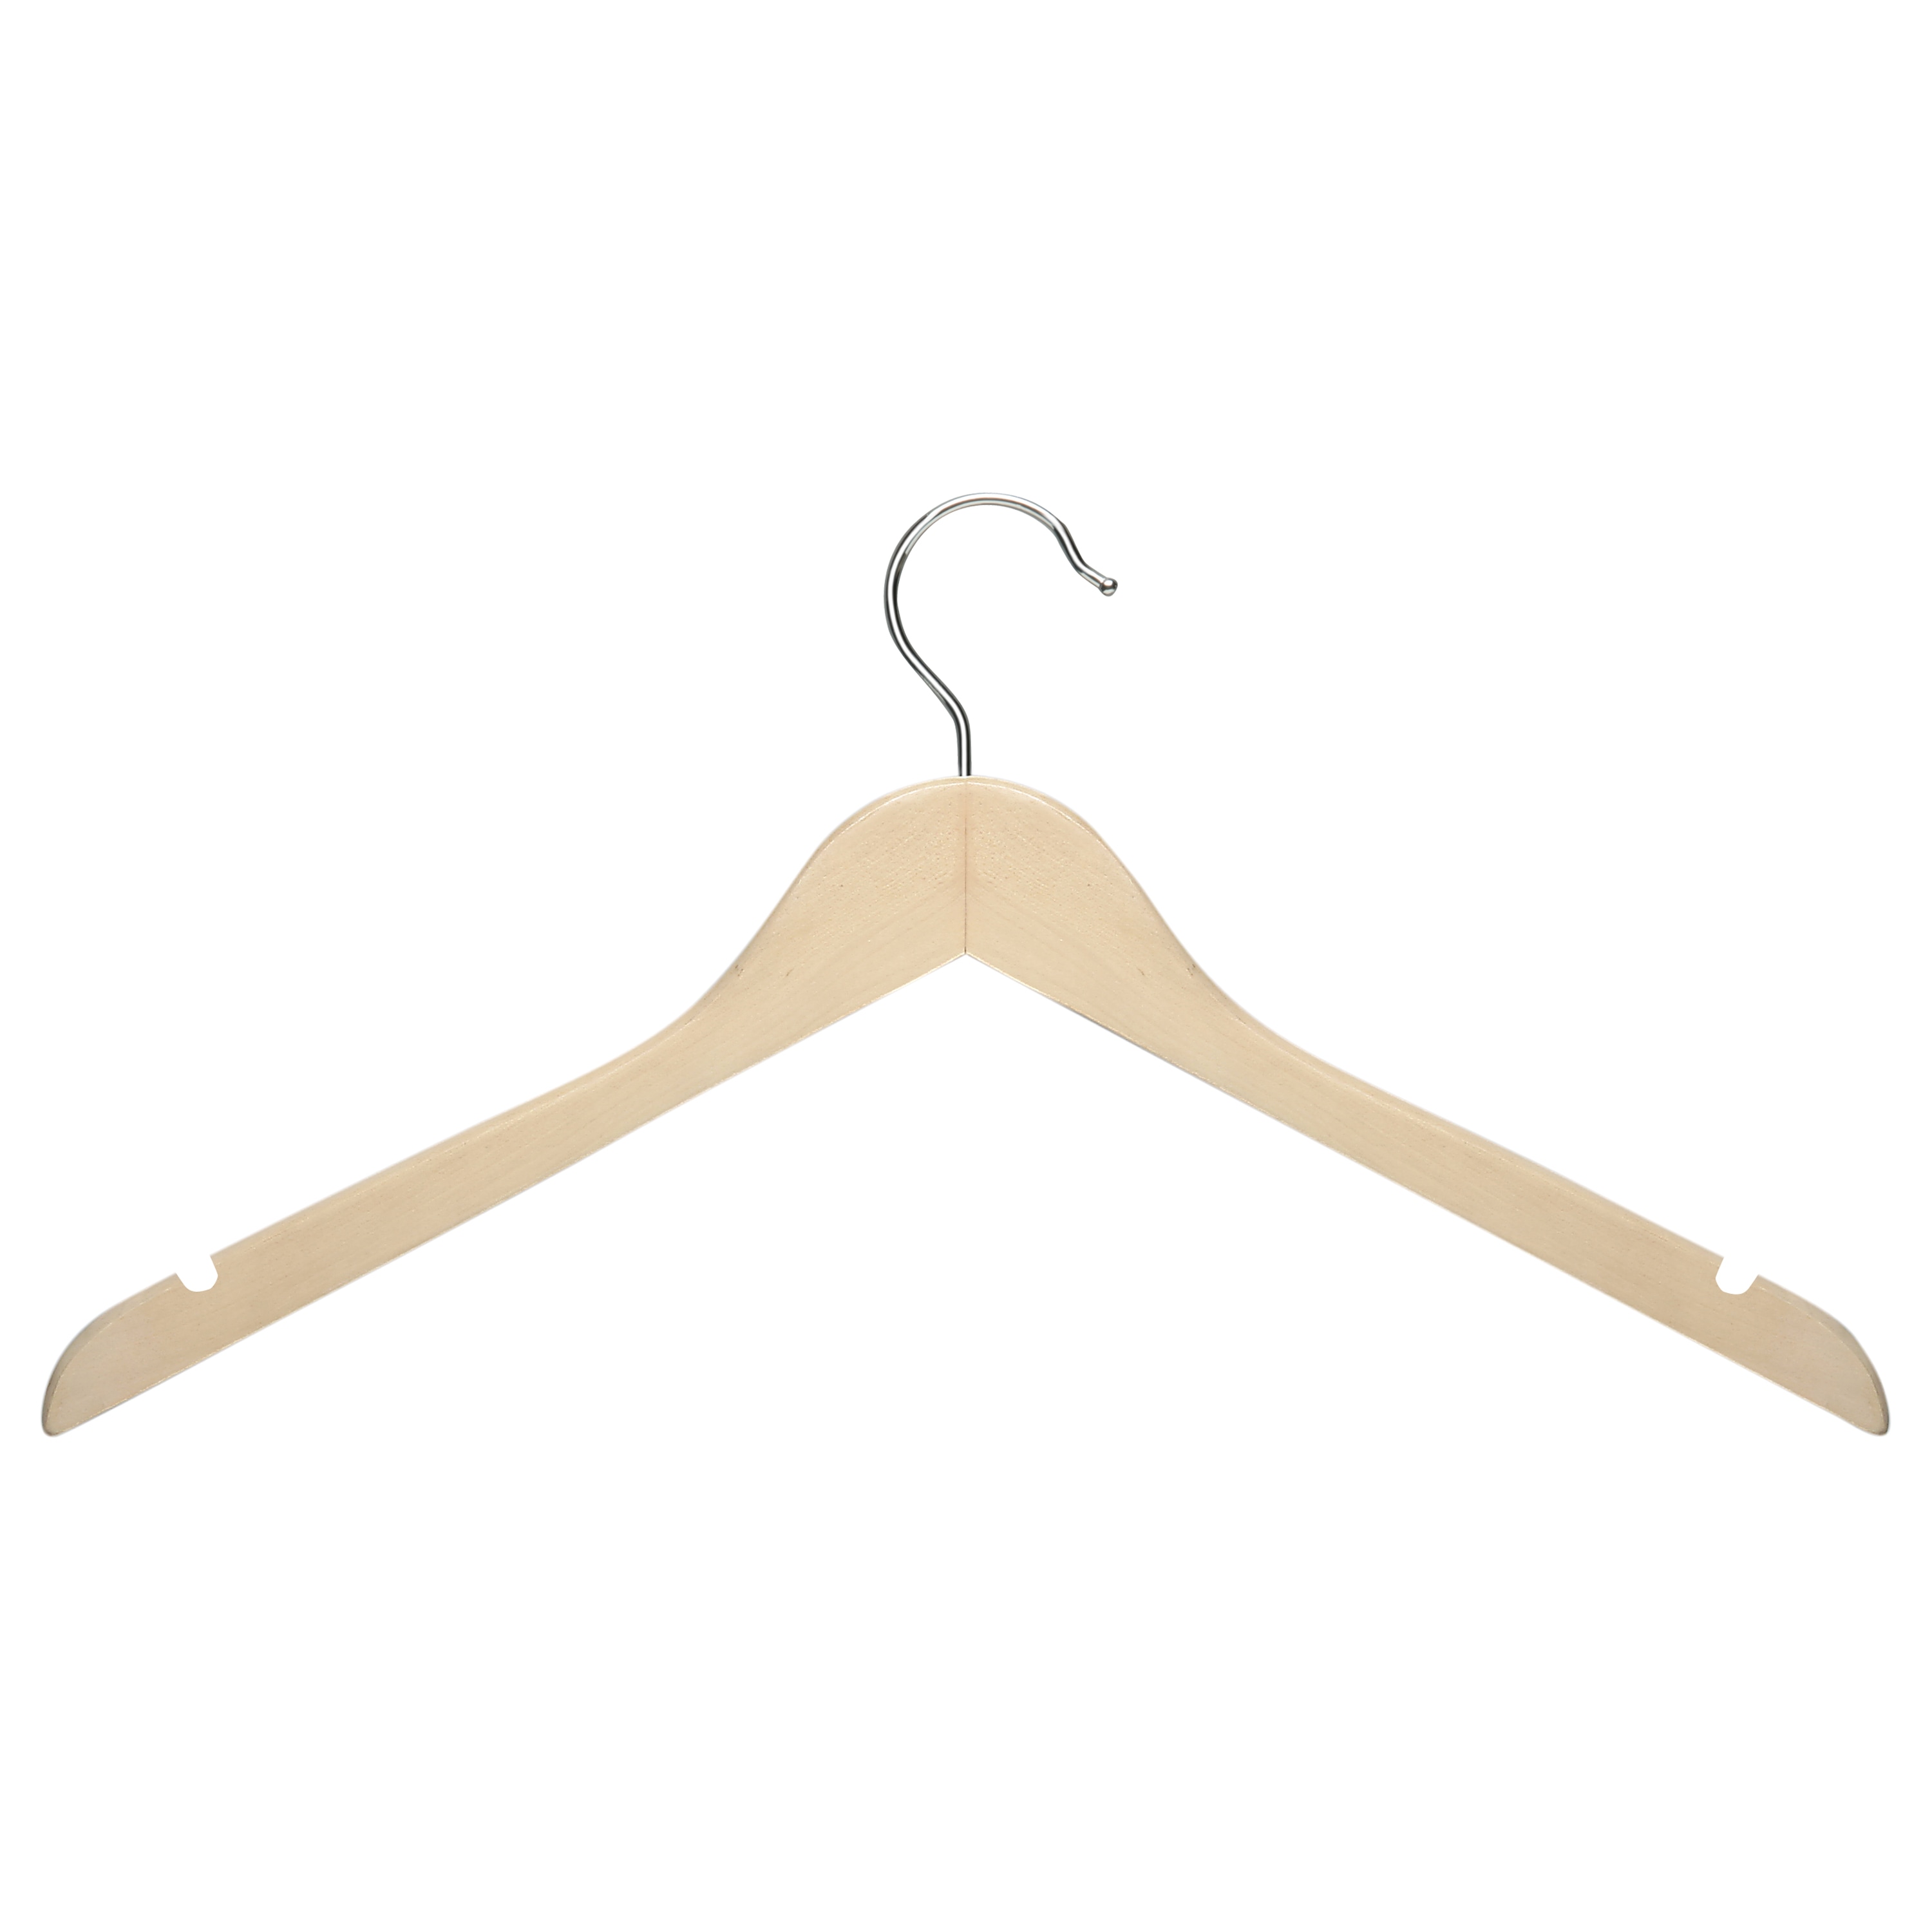 50 Pcs. of Standard Plastic Hangers for Clothes - Durable Tubular Hanger  Slim Design Idea for Daily Use Space Saving Heavy Duty Coat Pants Shirt  Hanger Set (White) 